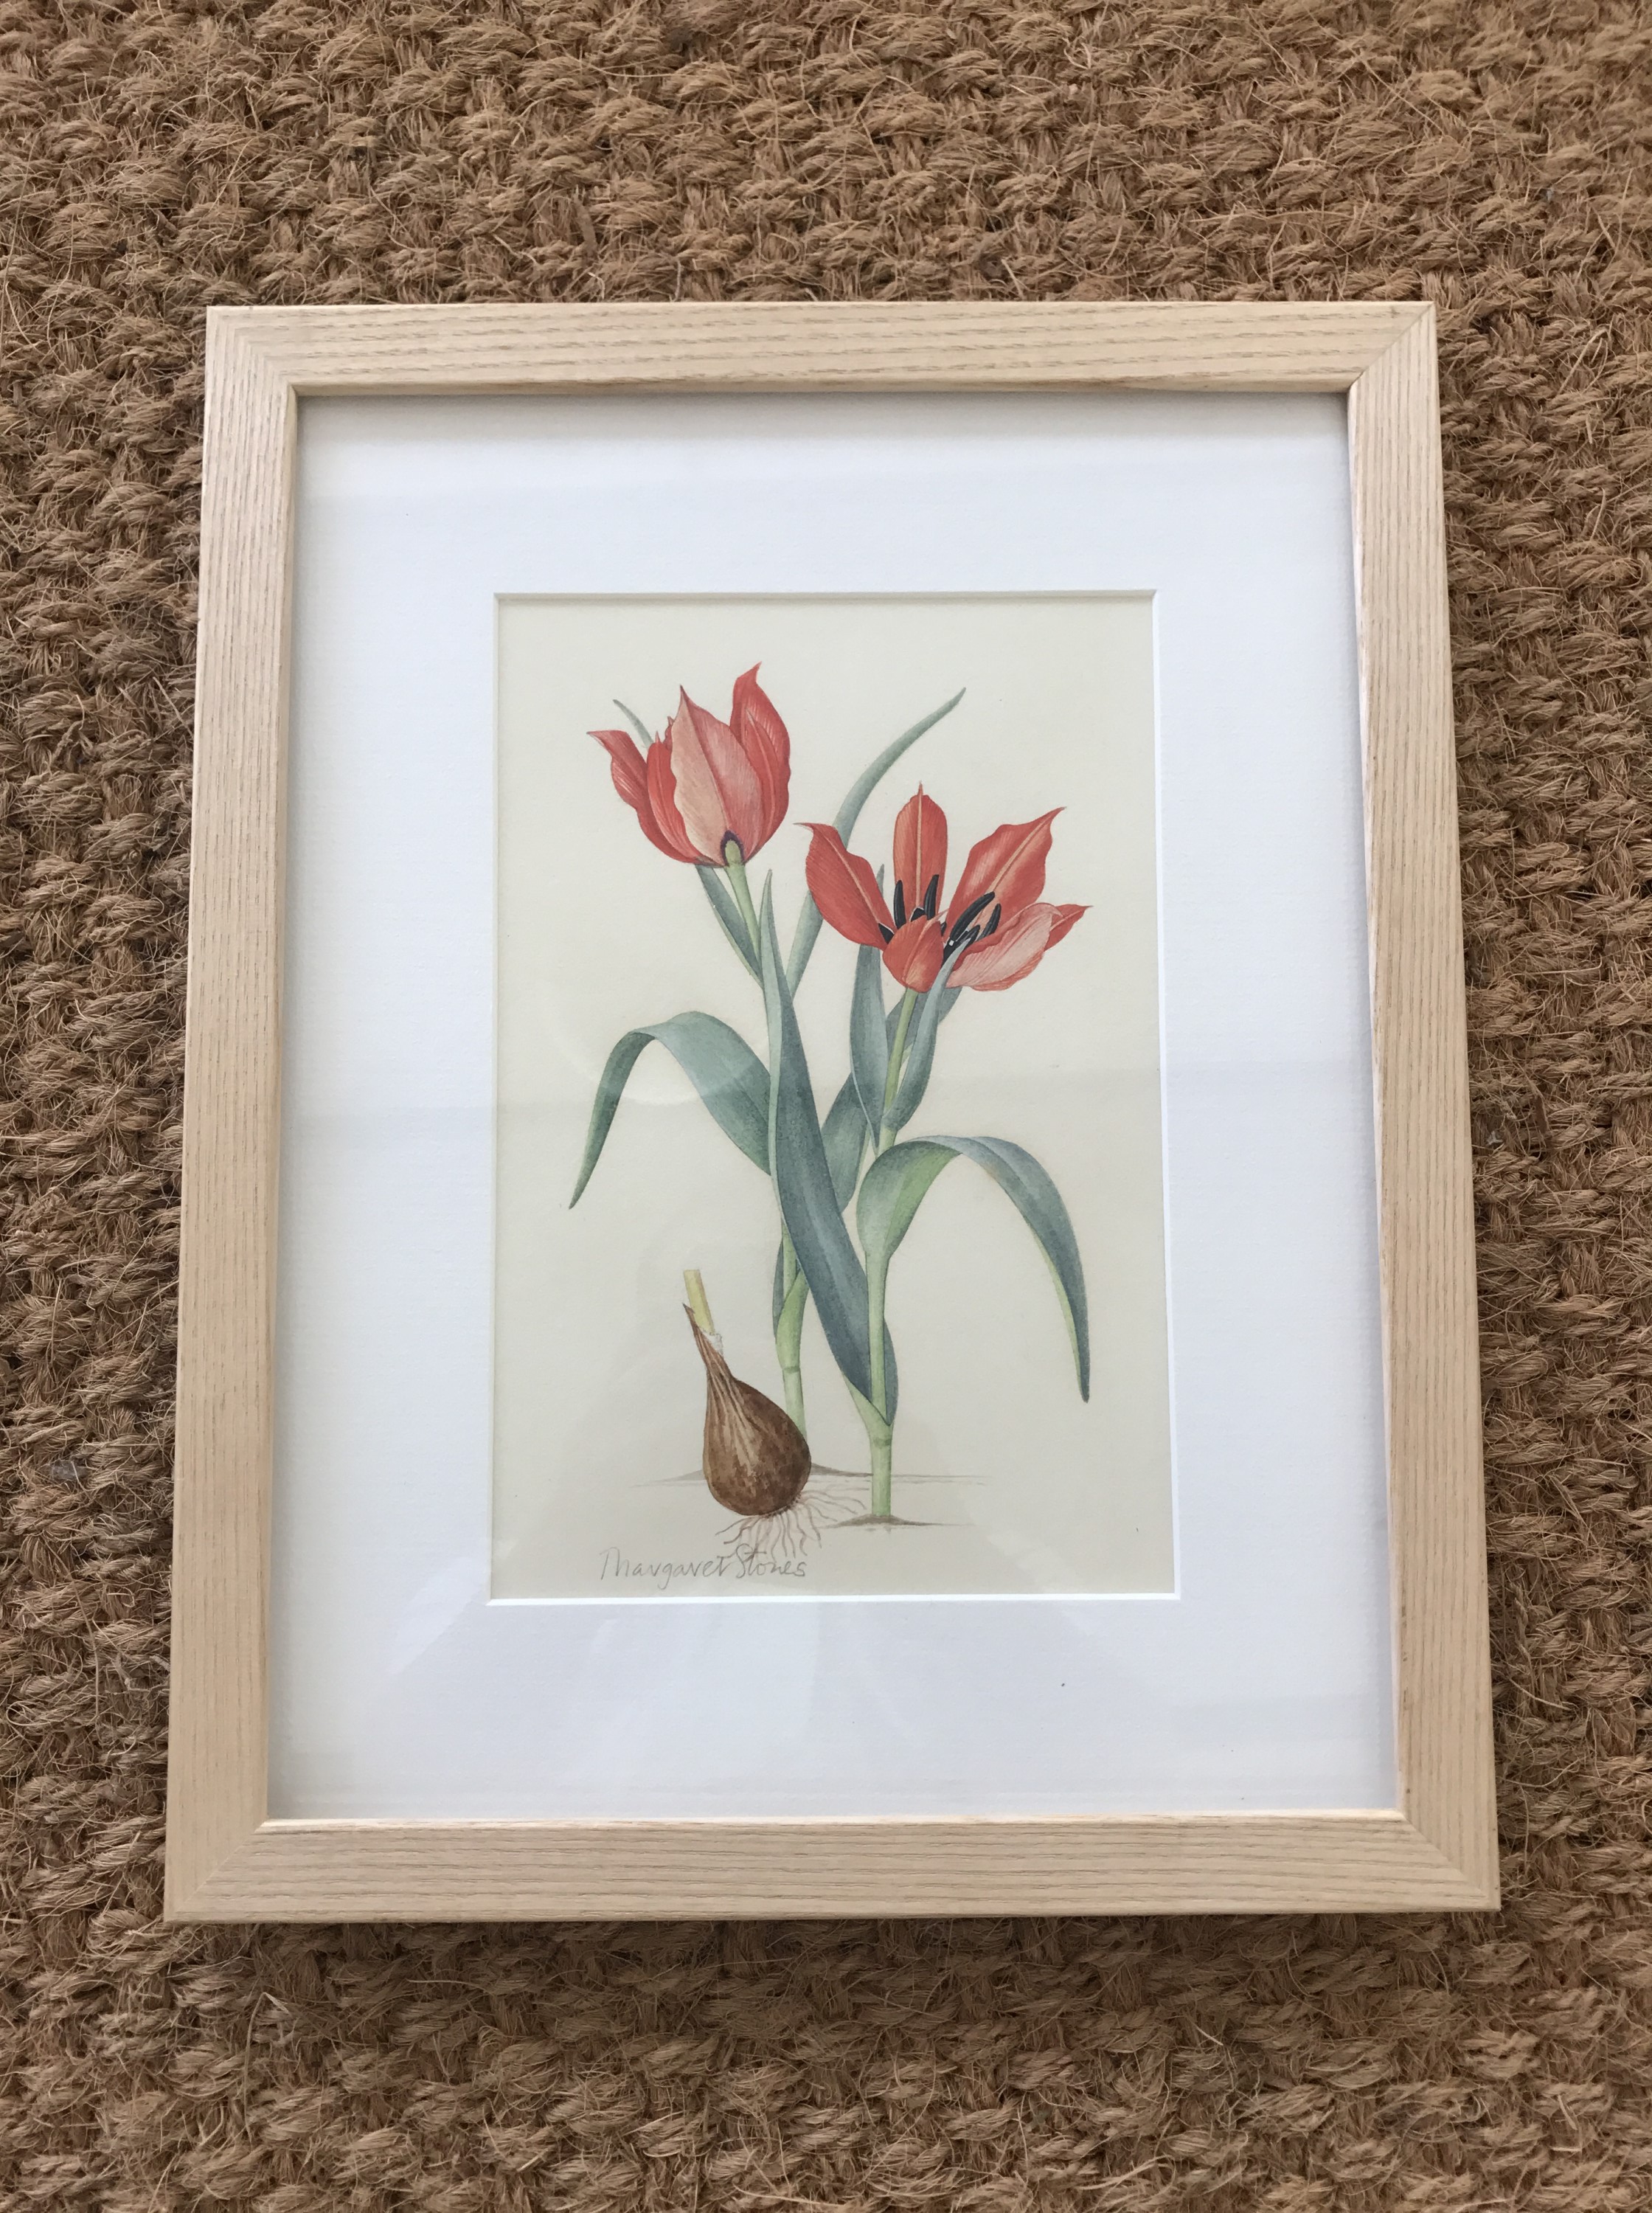 Elsie Margaret Stones (known as Margaret Stones) AM MBE (Australian, b.1920) Tulipa Eicheevi, - Image 2 of 2